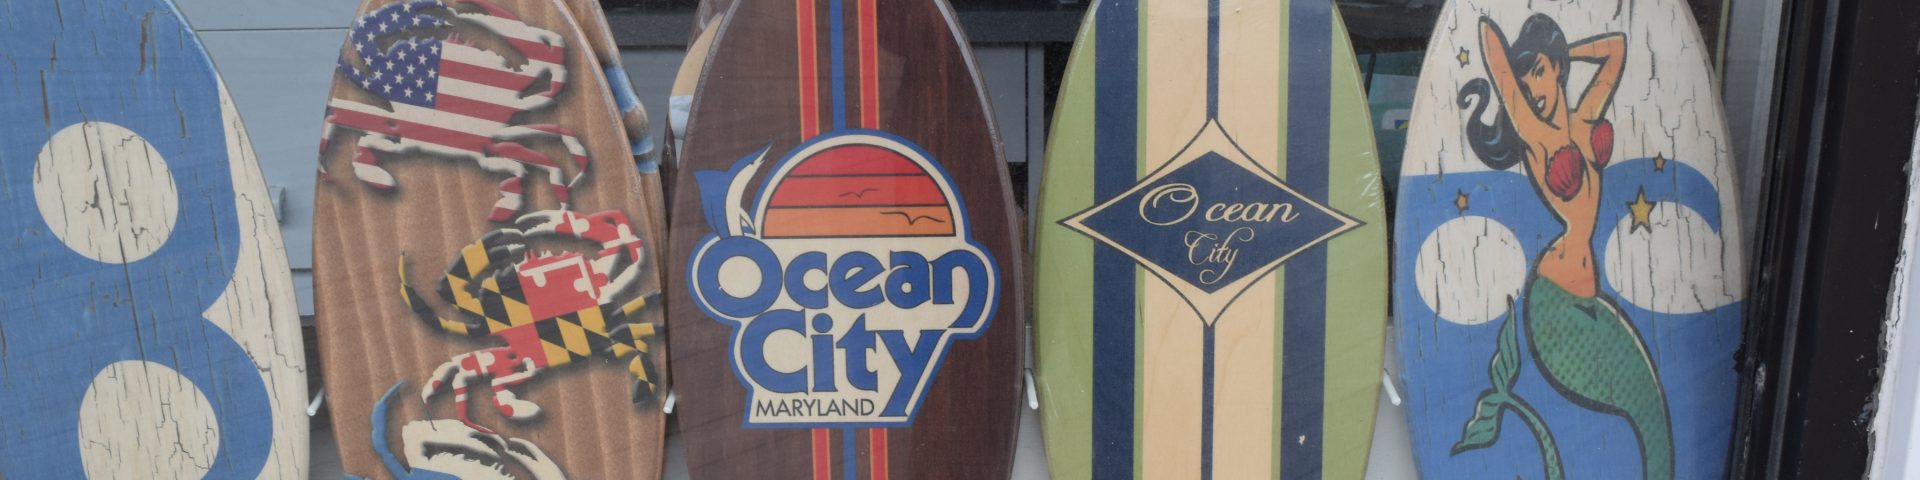 Ocean City shop